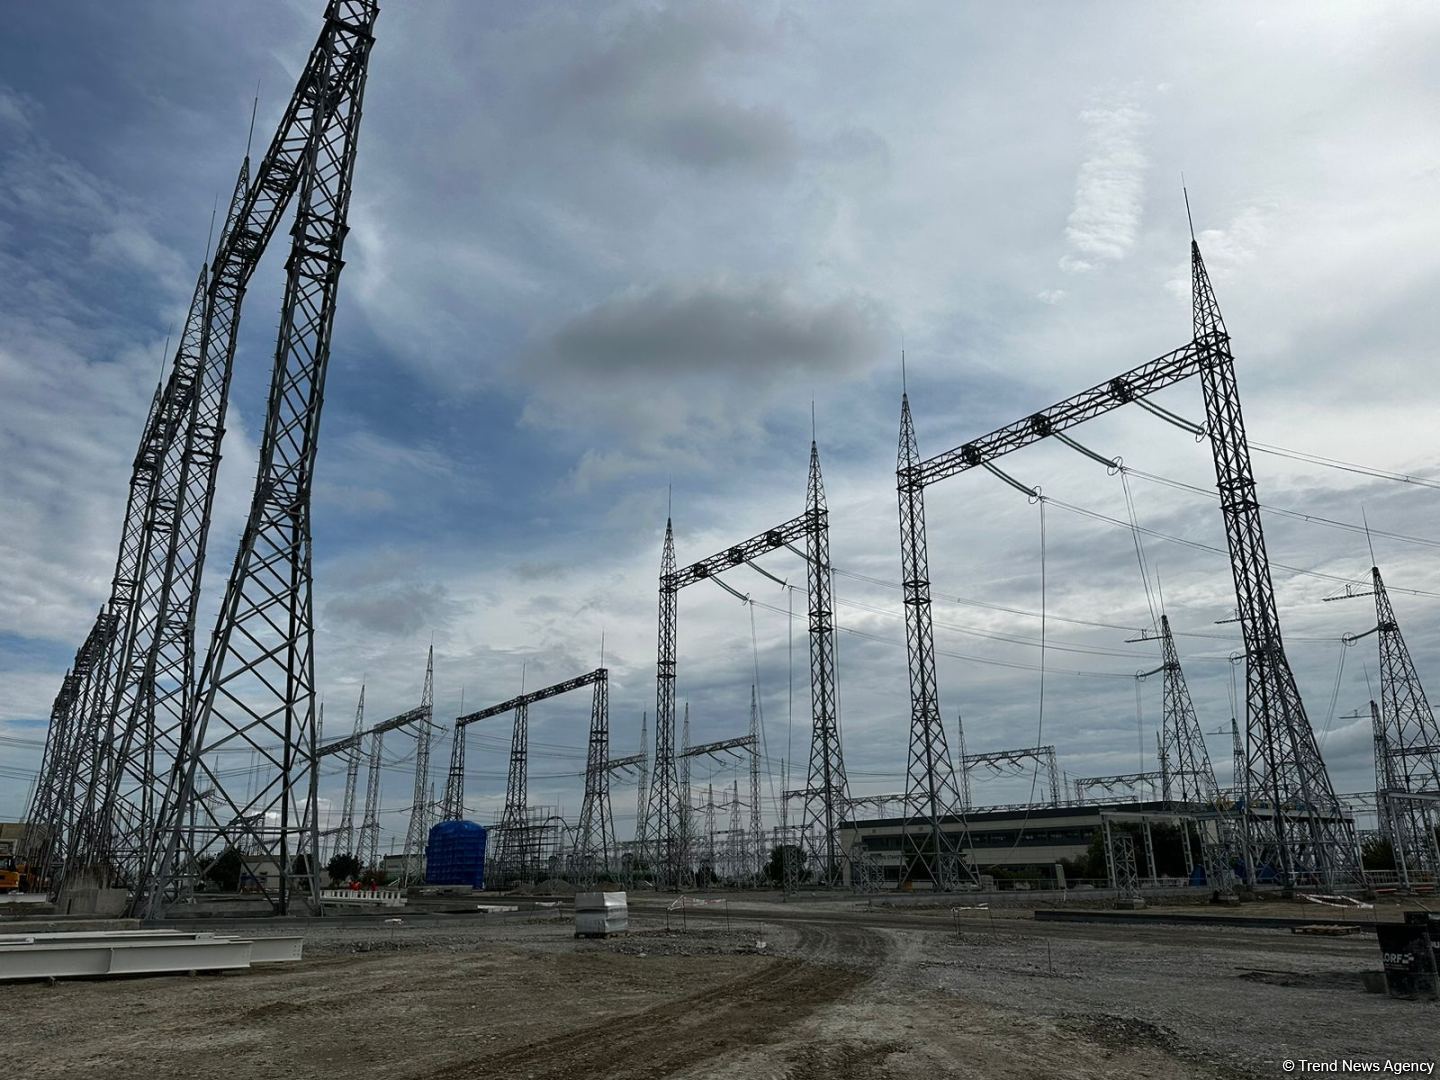 Scope of work done at new power plant in Azerbaijan's Mingachevir announced